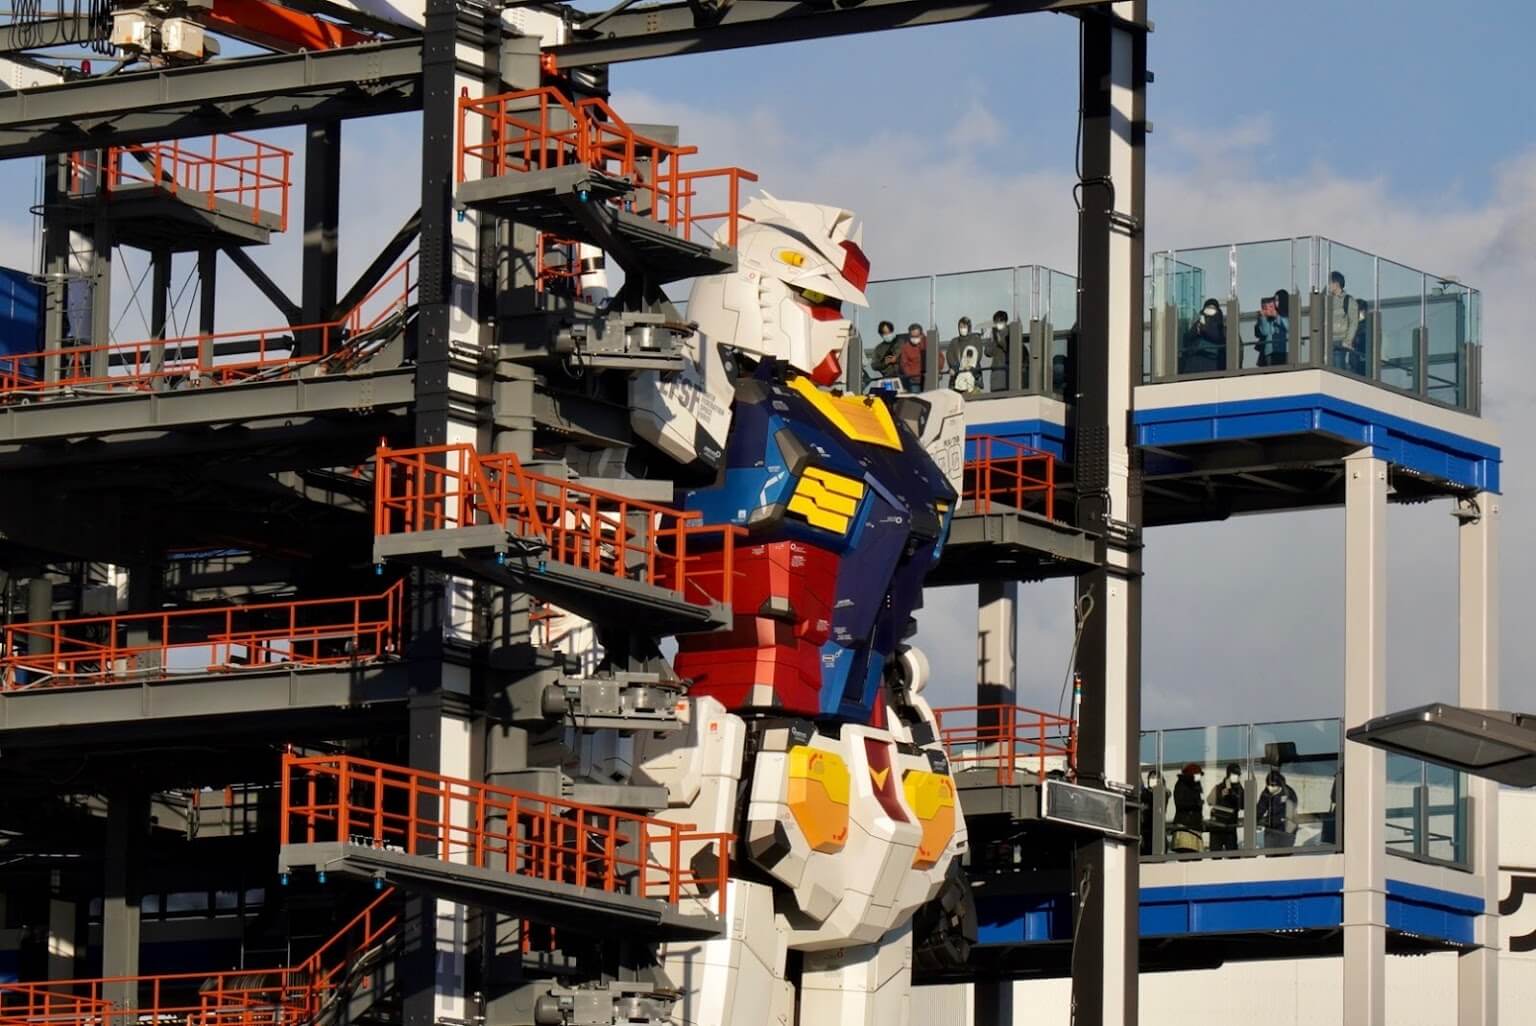 Gundam Factory Yokohama - gundam viewing platforms